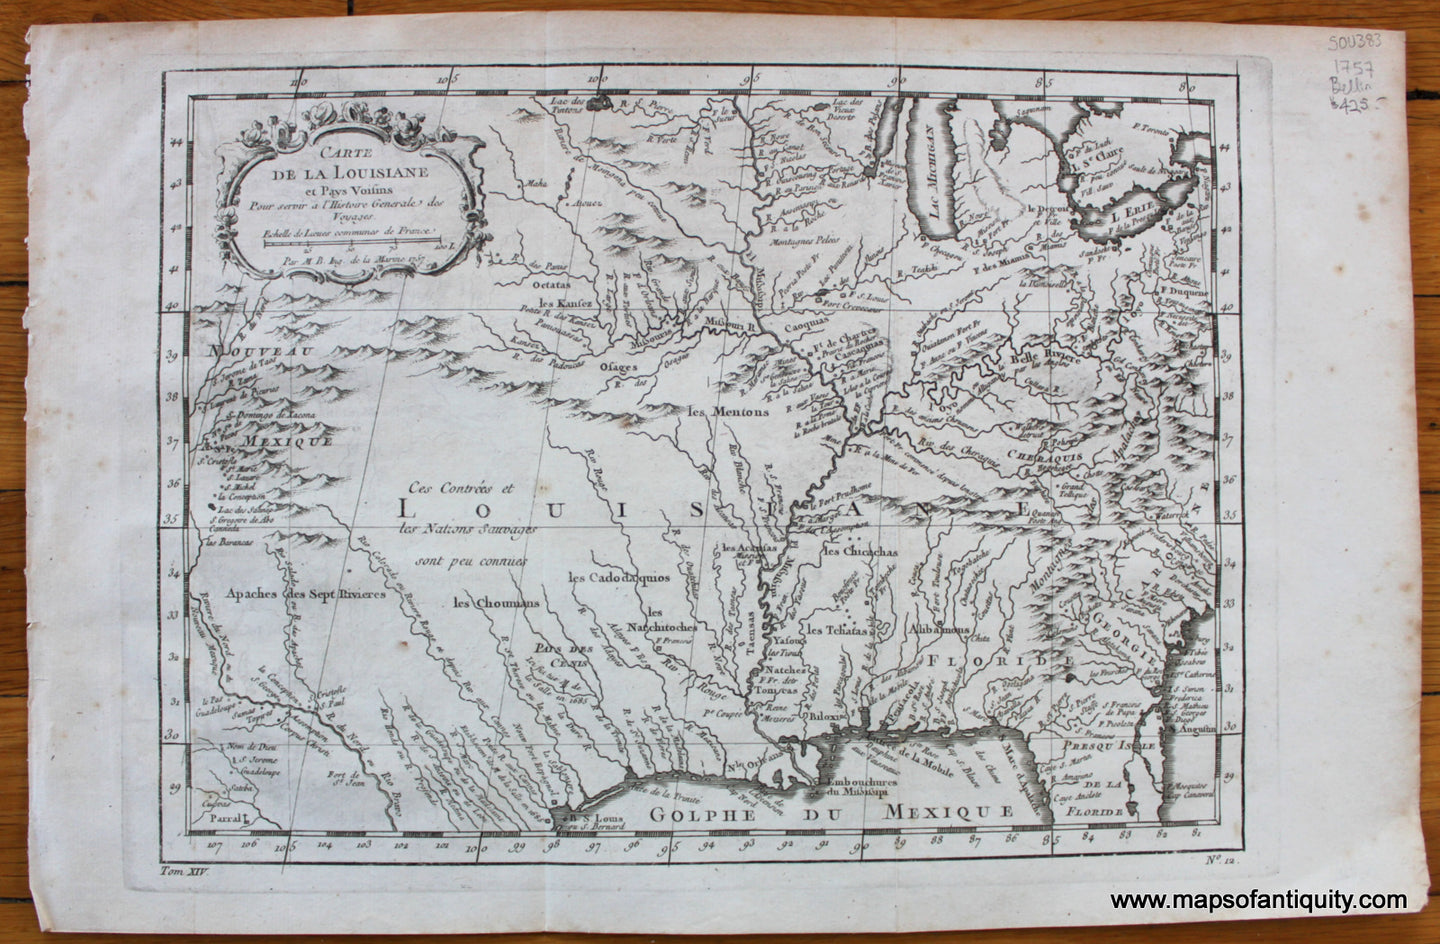 Antique-Map-Carte-de-La-Louisiane-et-Pays-Voisins-Bellin-Louisiana-United-States-South-Southern-US-U.S.-1757-1750s-1700s-Mid-18th-Century-Early-Maps-of-Antiquity